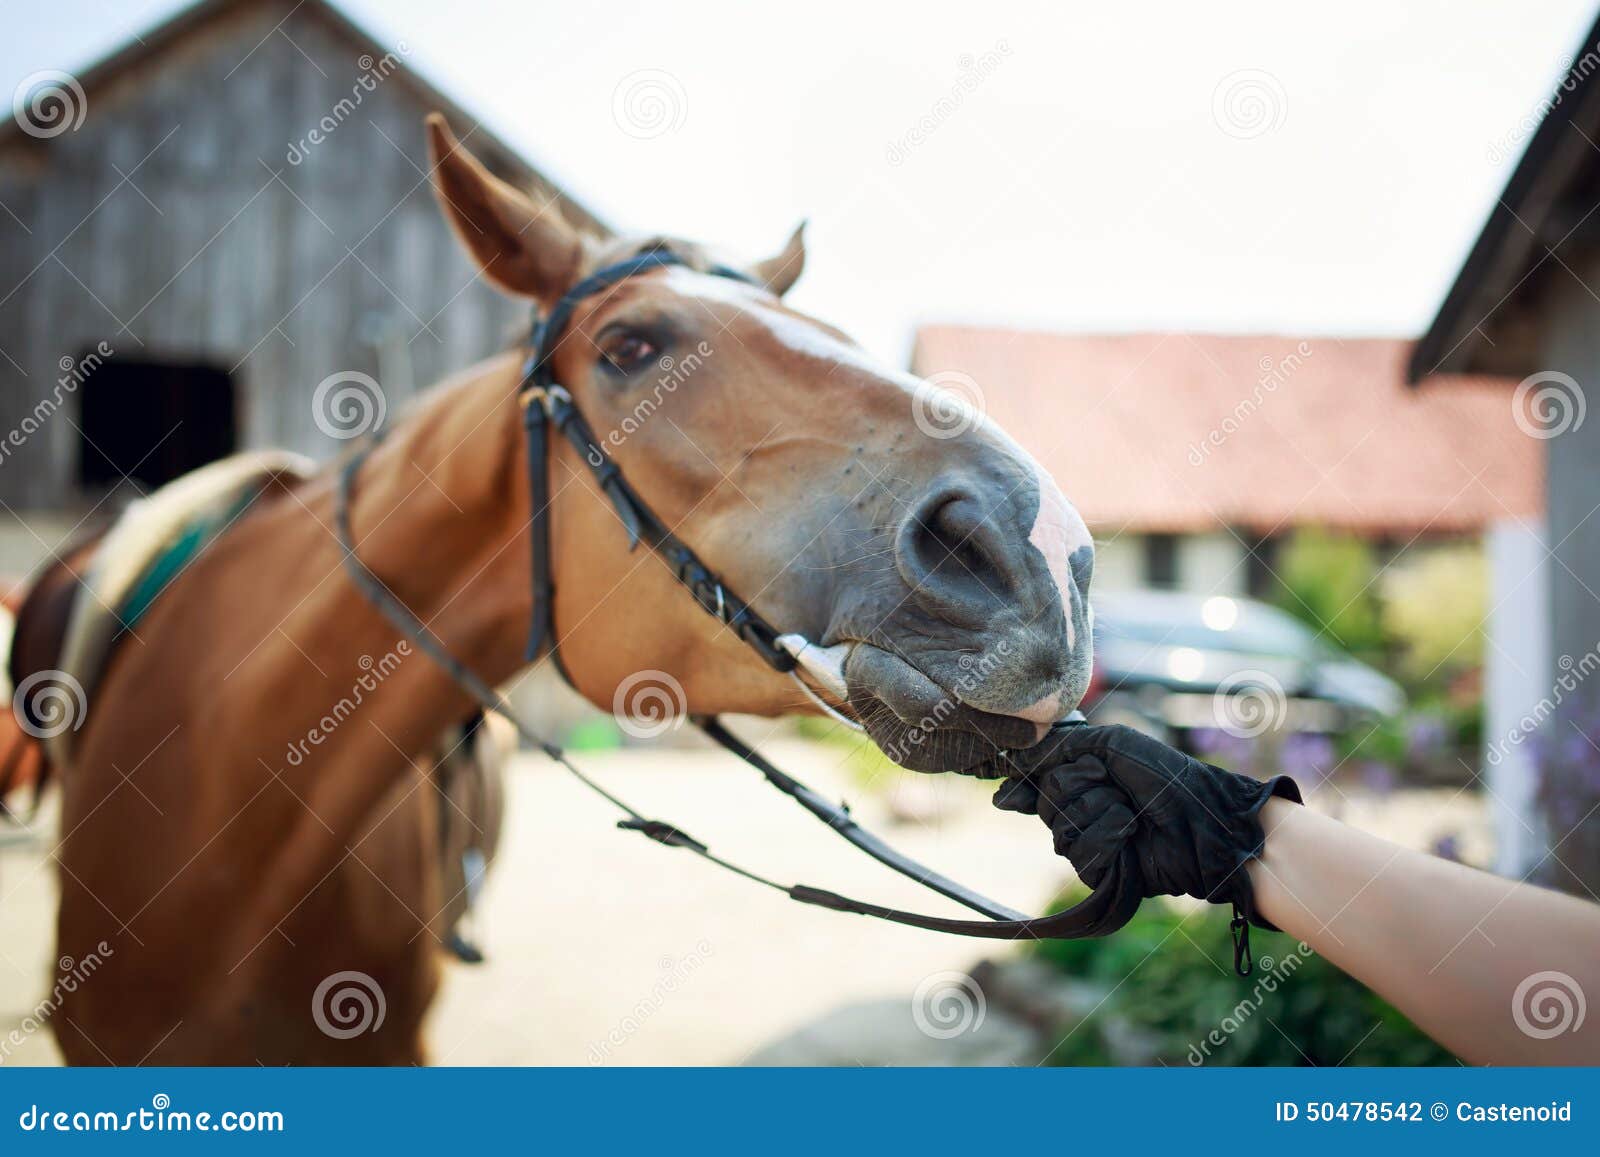 horse rider pulls the reins